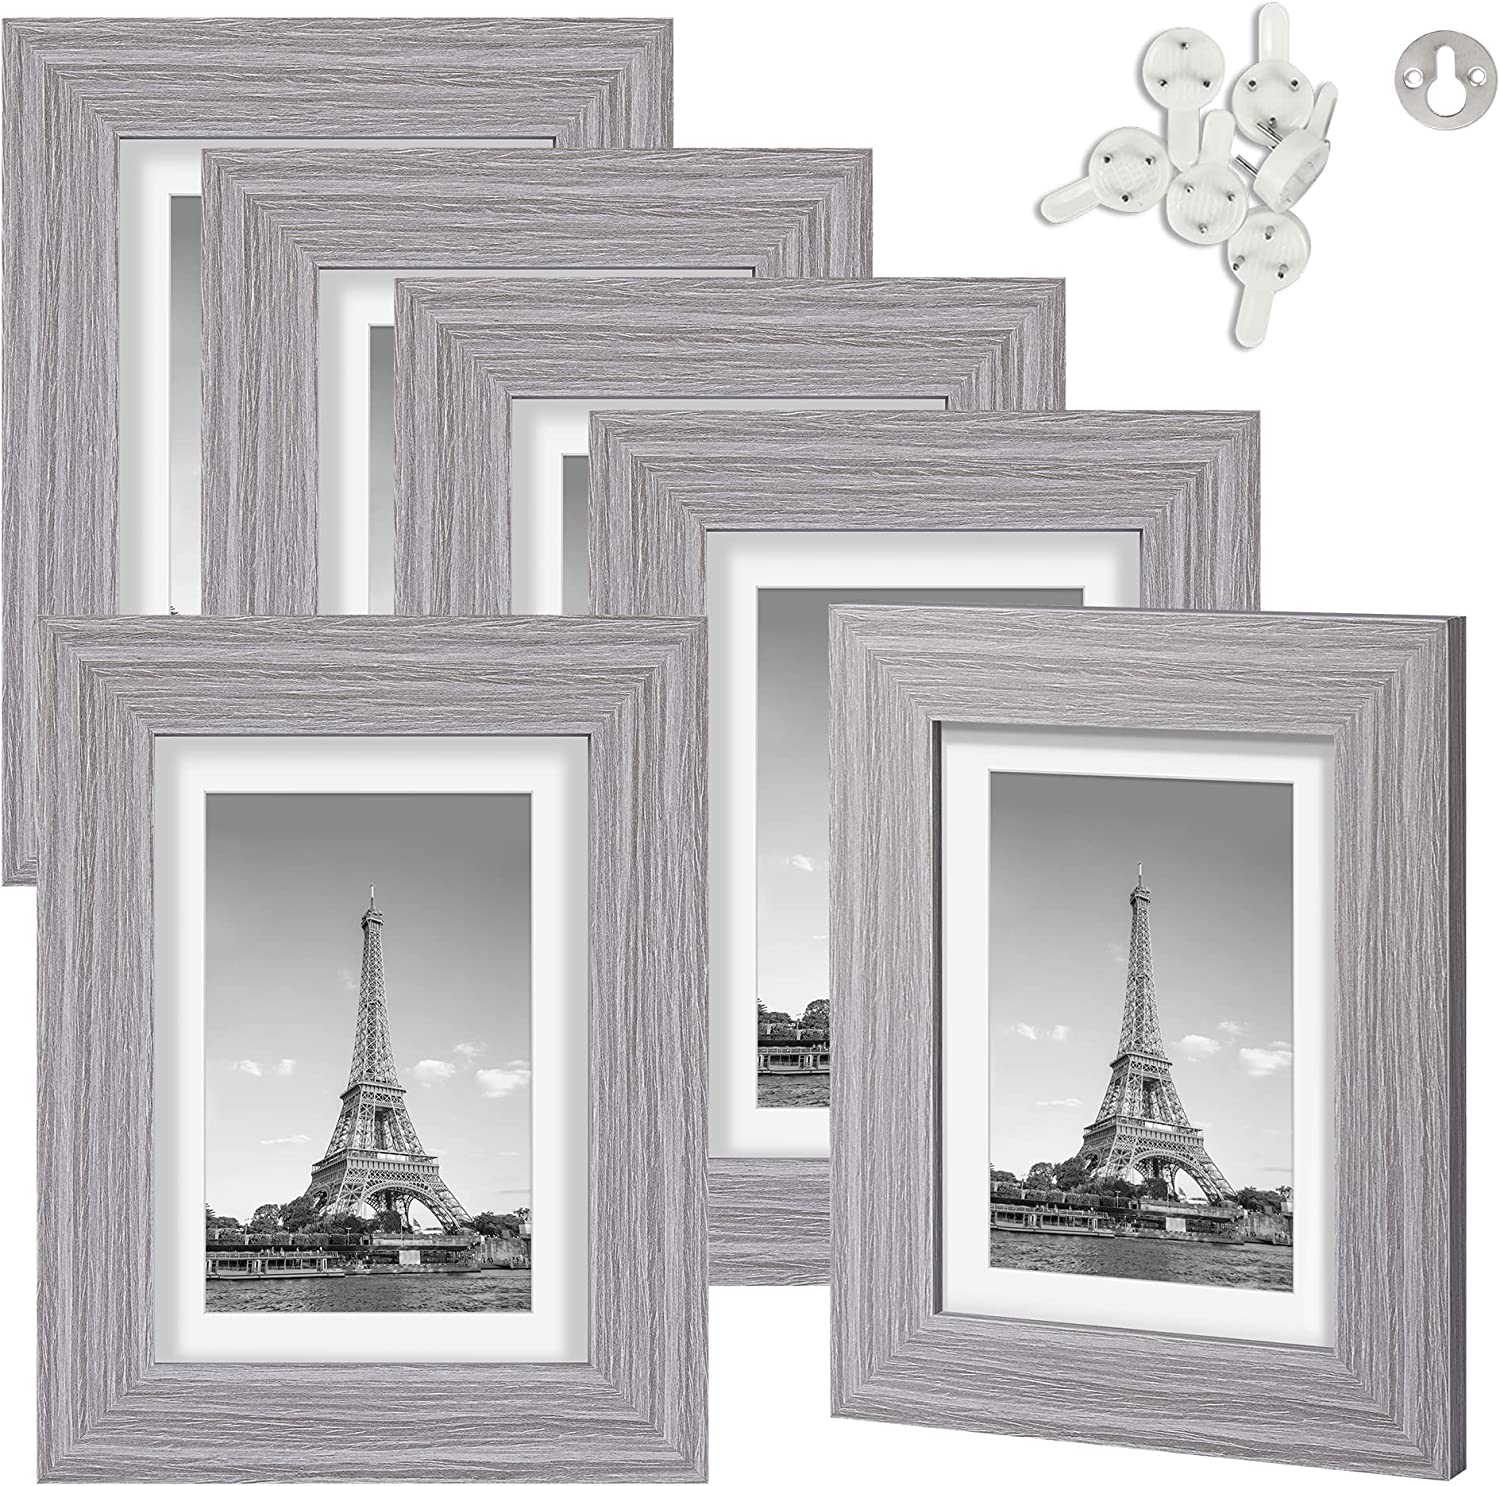 Single Collage Frame - Black & White, 5x7